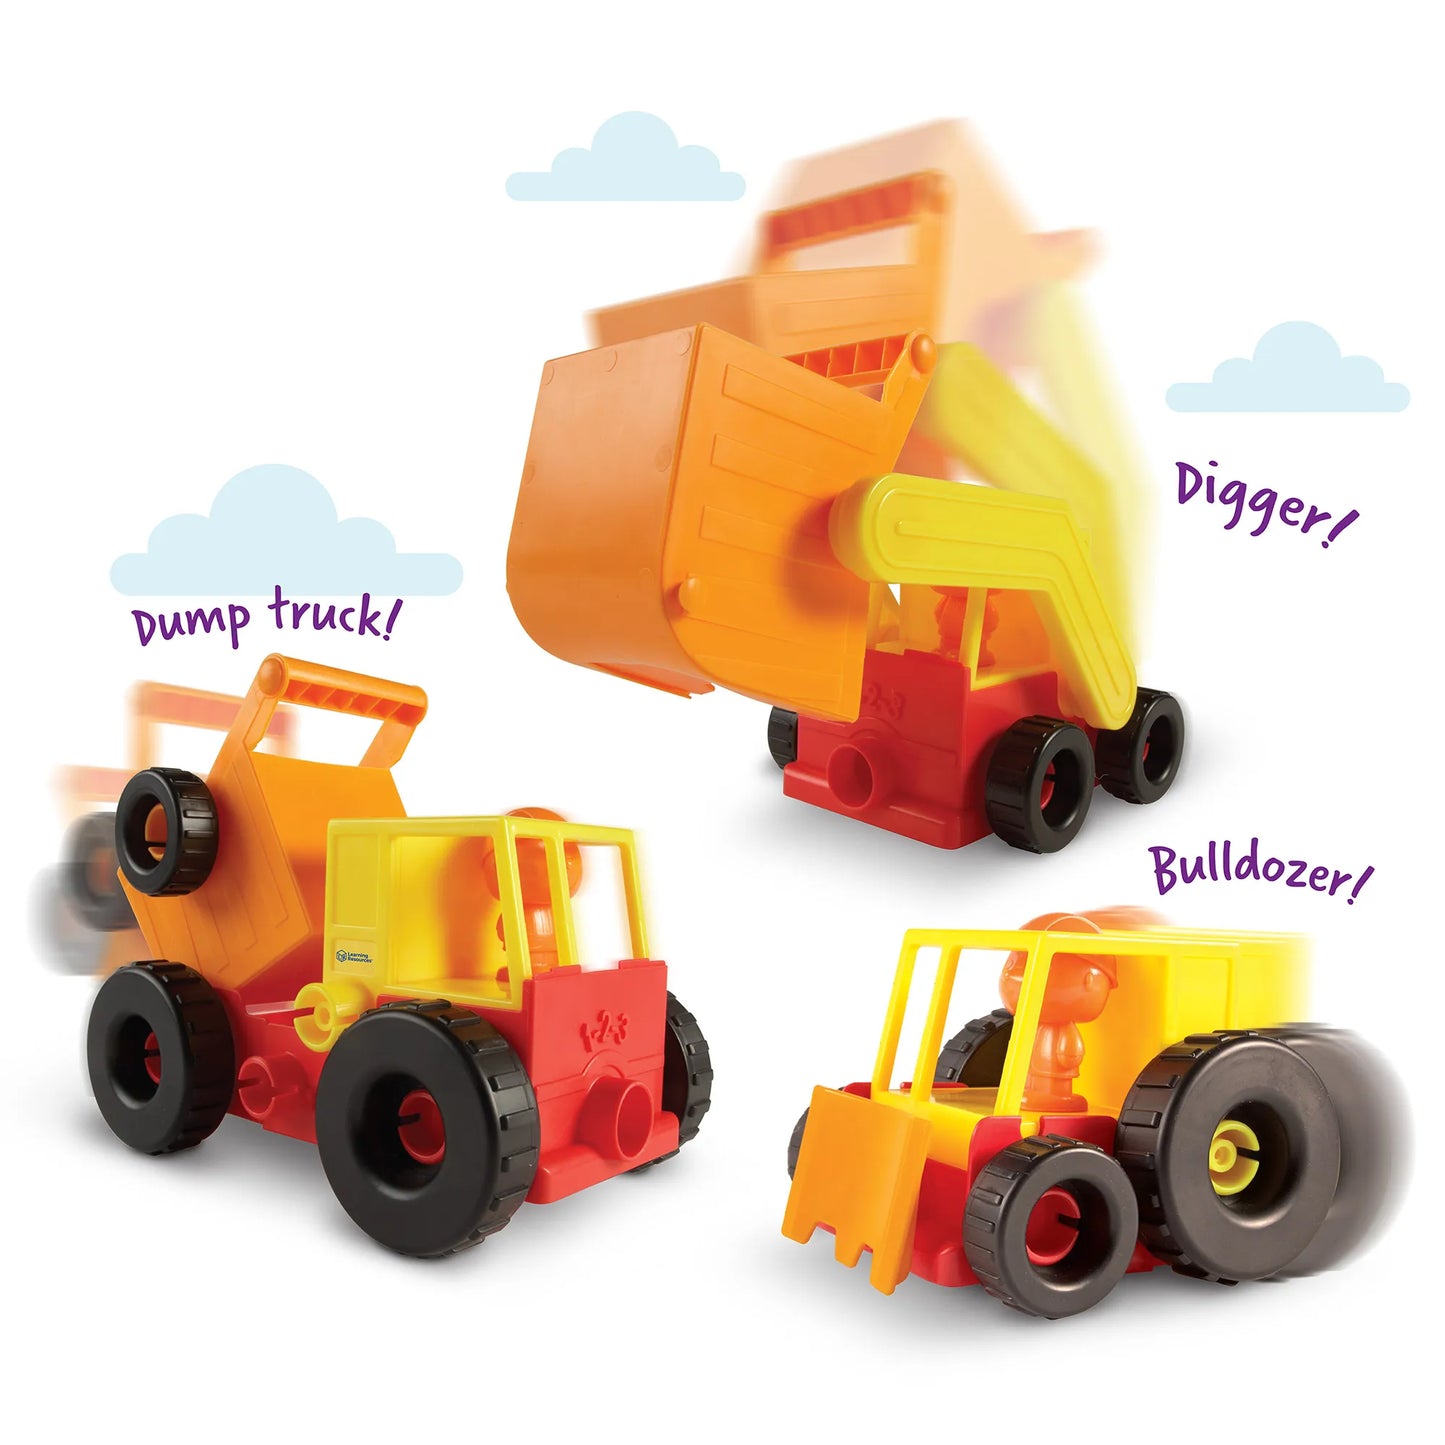 Learning Resources 1-2-3 Build It: Construction Crew 建築玩具,推土機,挖掘機,傾倒卡車